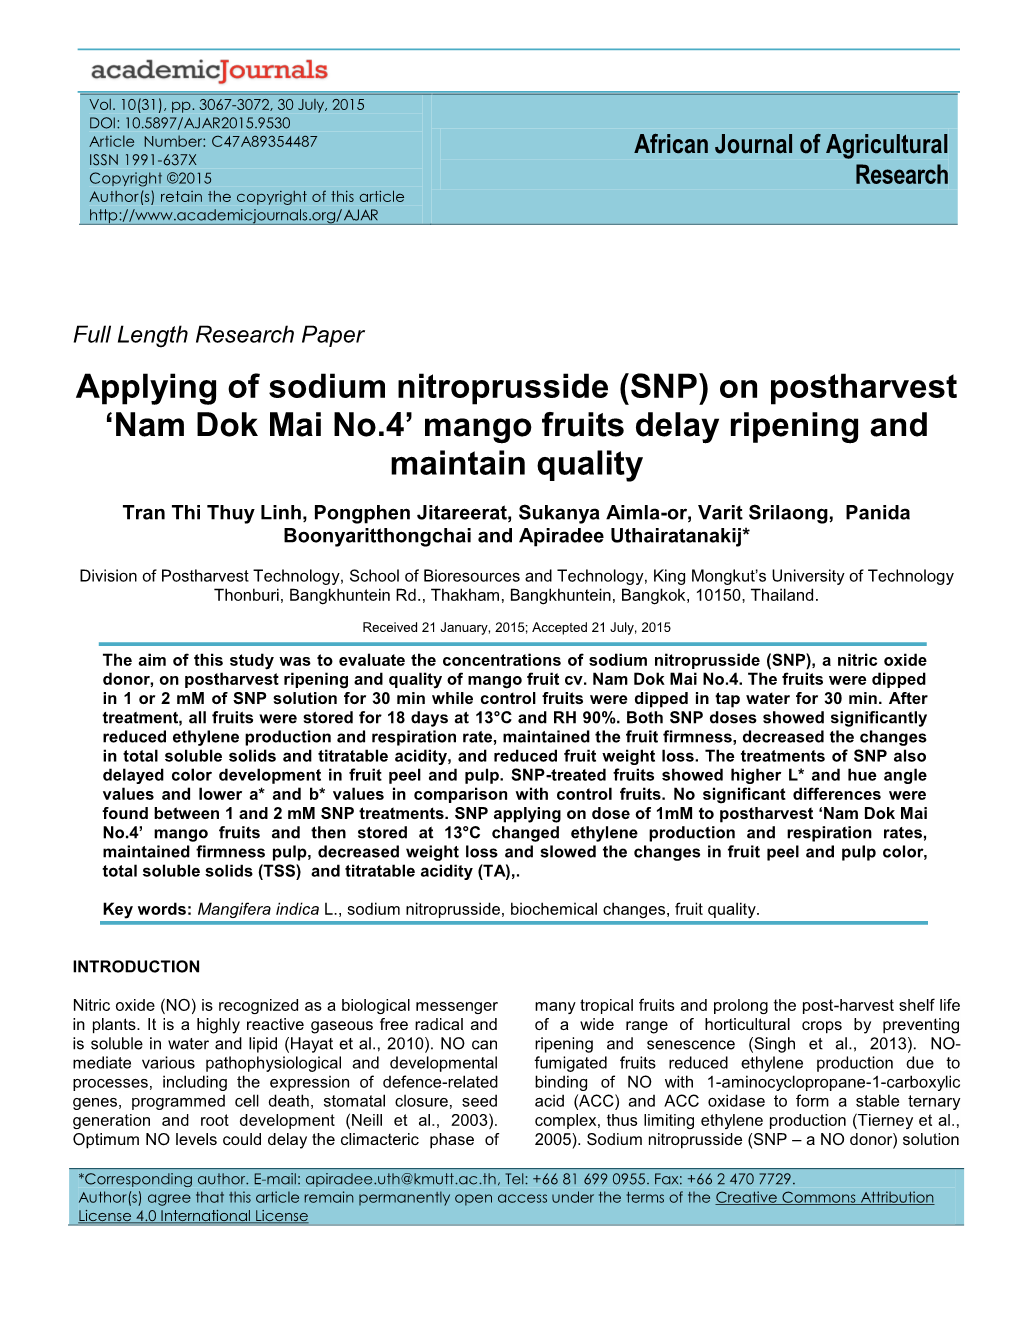 Applying of Sodium Nitroprusside (SNP) on Postharvest 'Nam Dok Mai No.4' Mango Fruits Delay Ripening and Maintain Quality